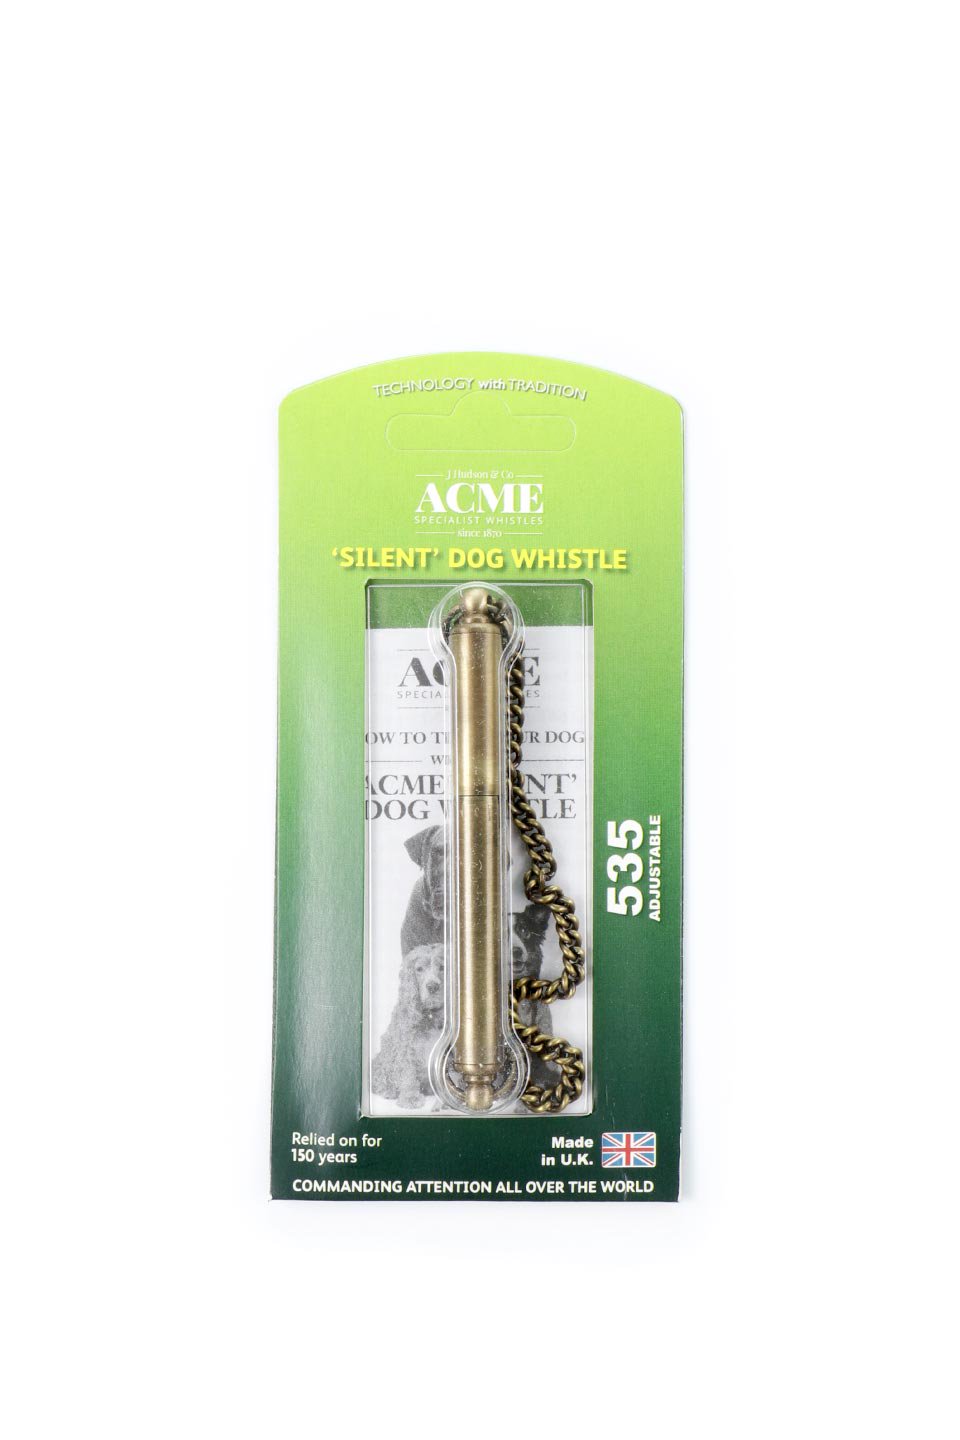 Acme Silent Dog Whistle (Antique Brass) アクメ社・サイレントドッグホイッスル（アンティークドブラス） / by  Acme|ドッググッズを海外から直輸入/福島市パセオ通りbloom